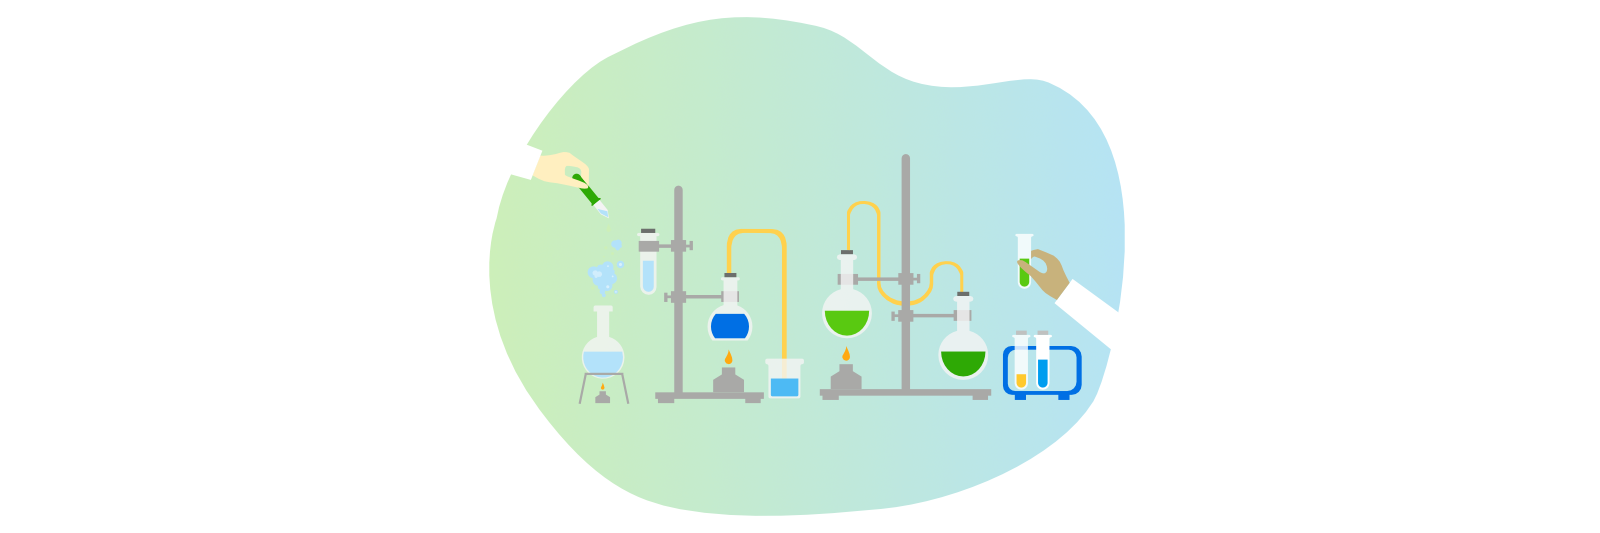 Illustration of lab equipment